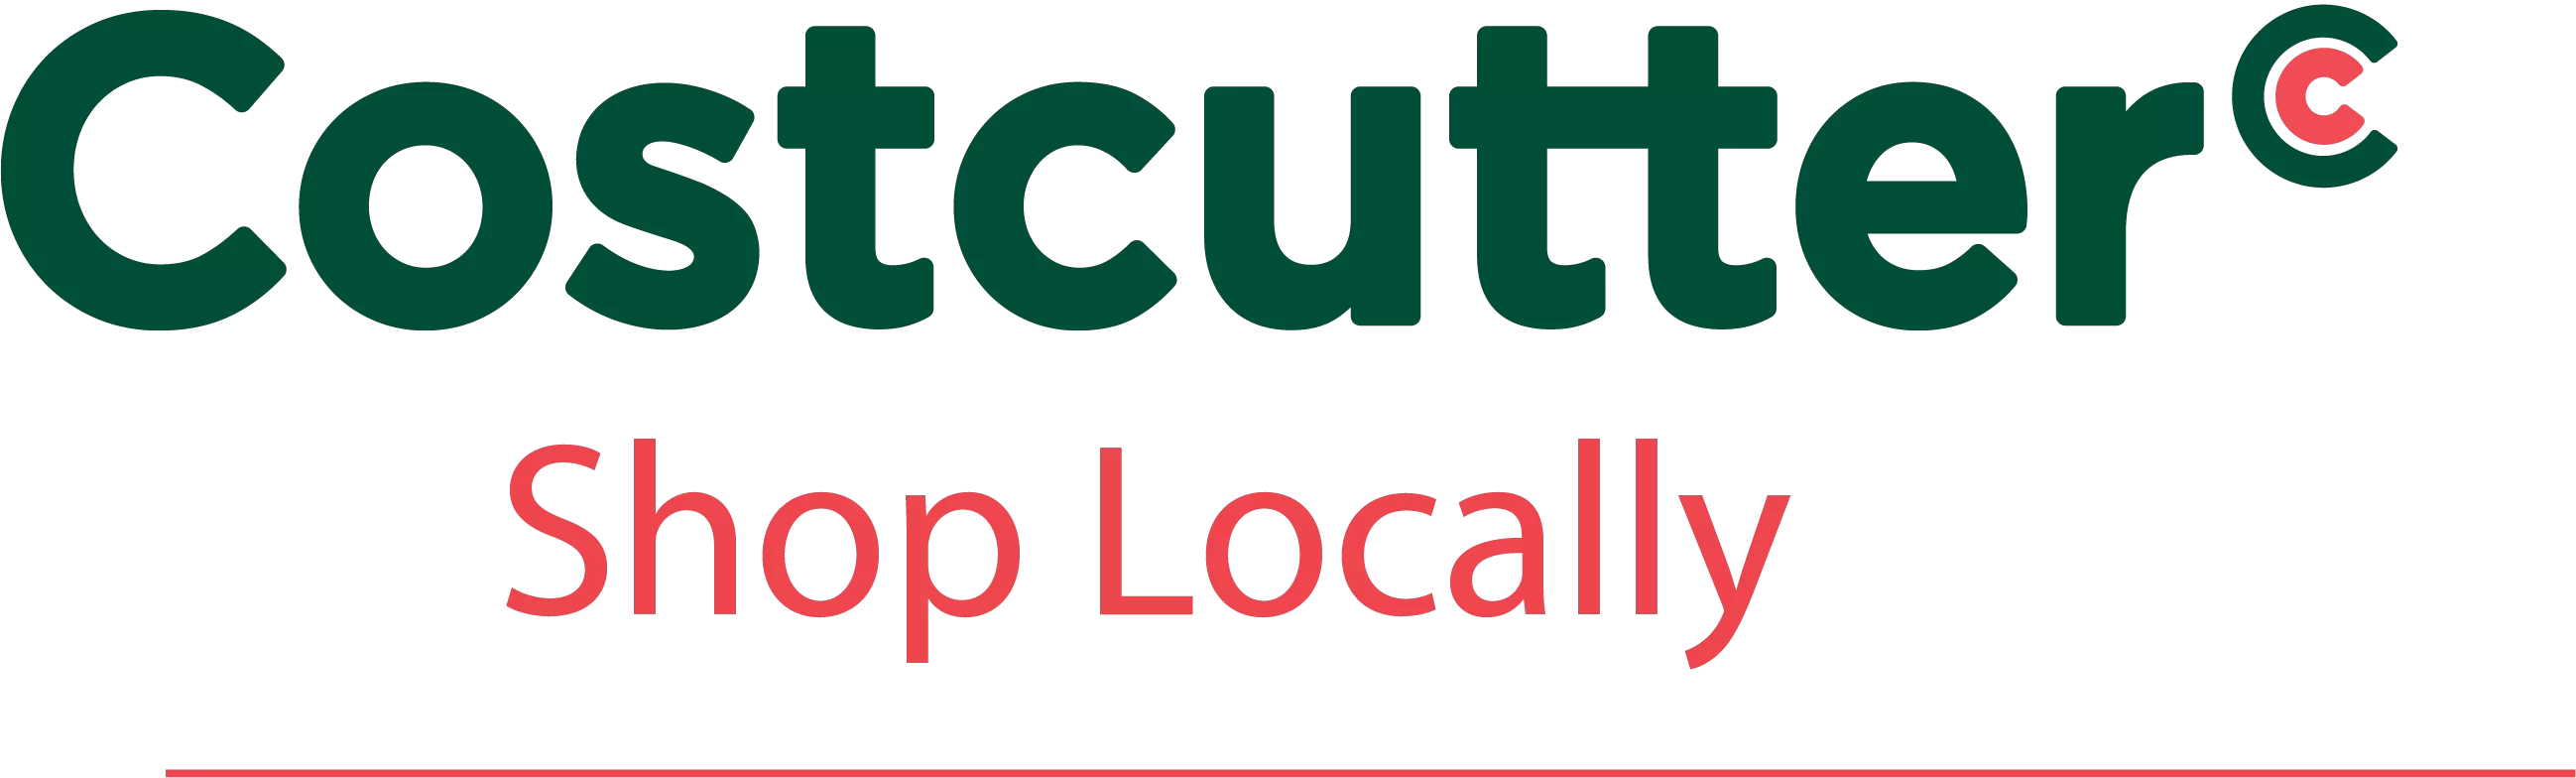 Costcutter - Shop Locally